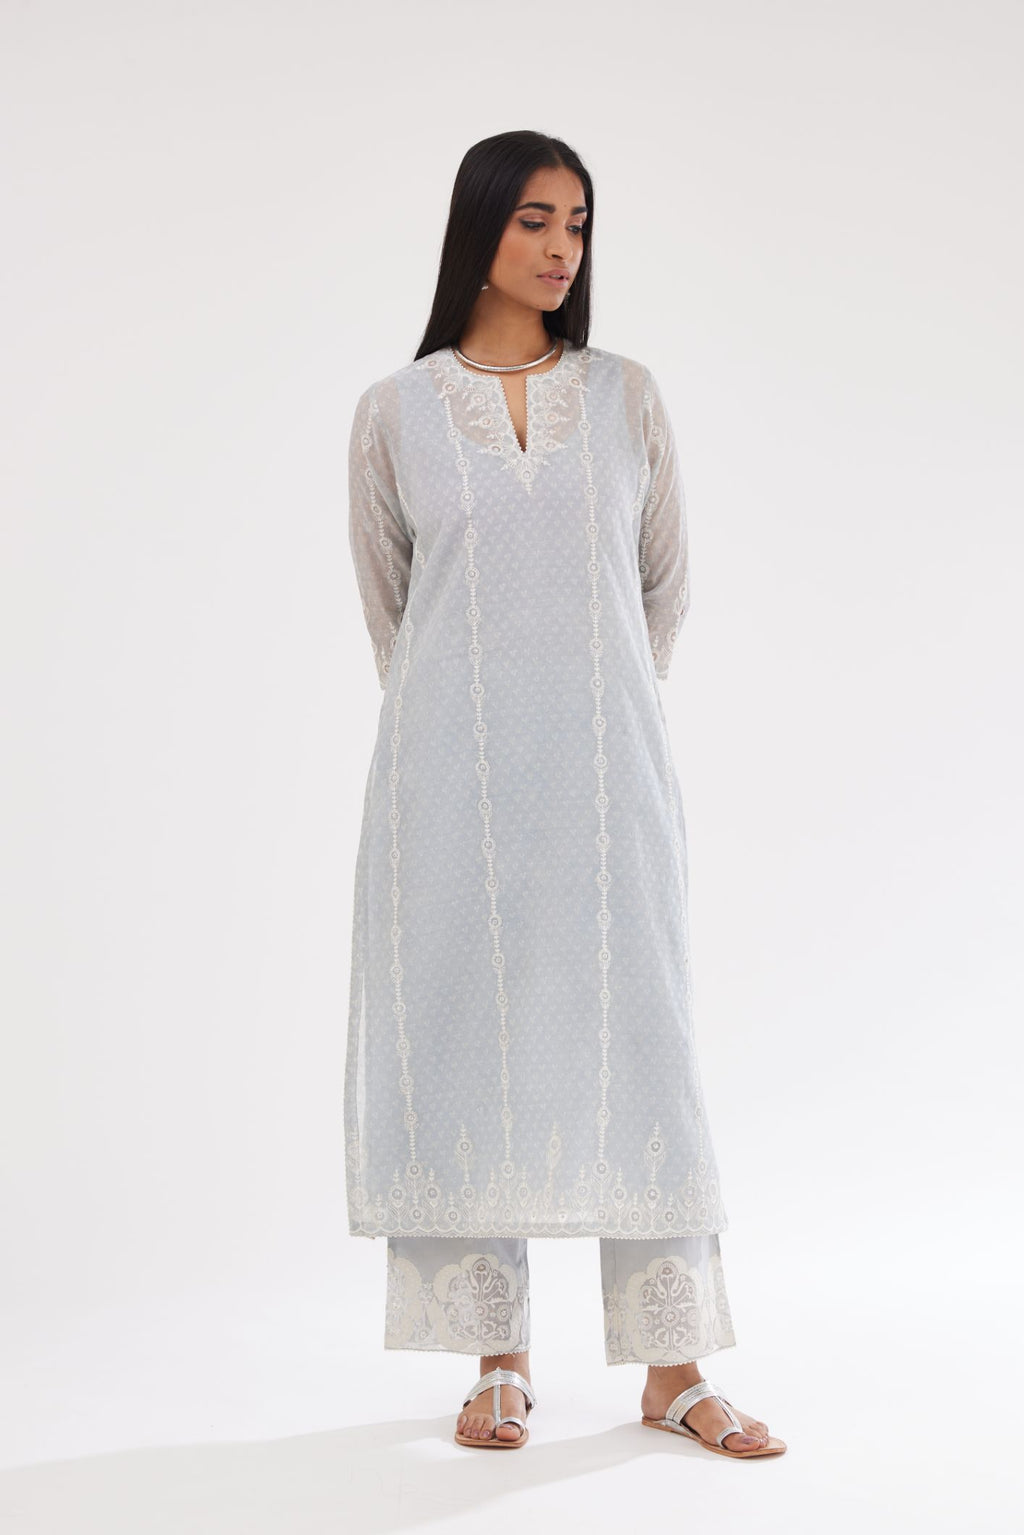 Blue cotton chanderi hand block printed kurta set with dori and silk thread chhari - stripes, all over and heavier butas at hem.